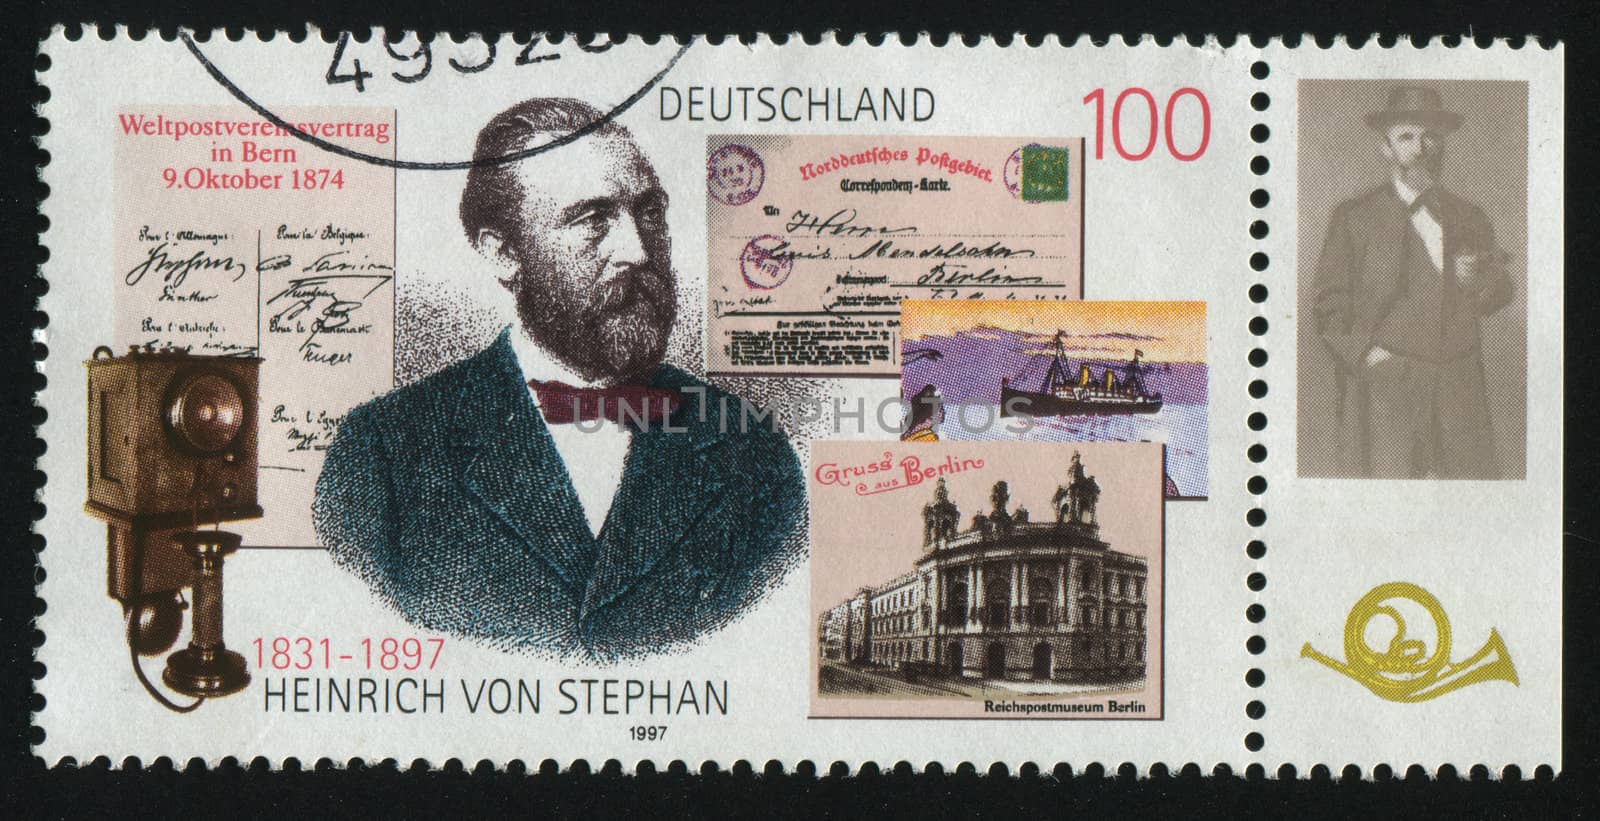 GERMANY- CIRCA 1997: stamp printed by Germany, shows Heinrich von Stephan, circa 1997